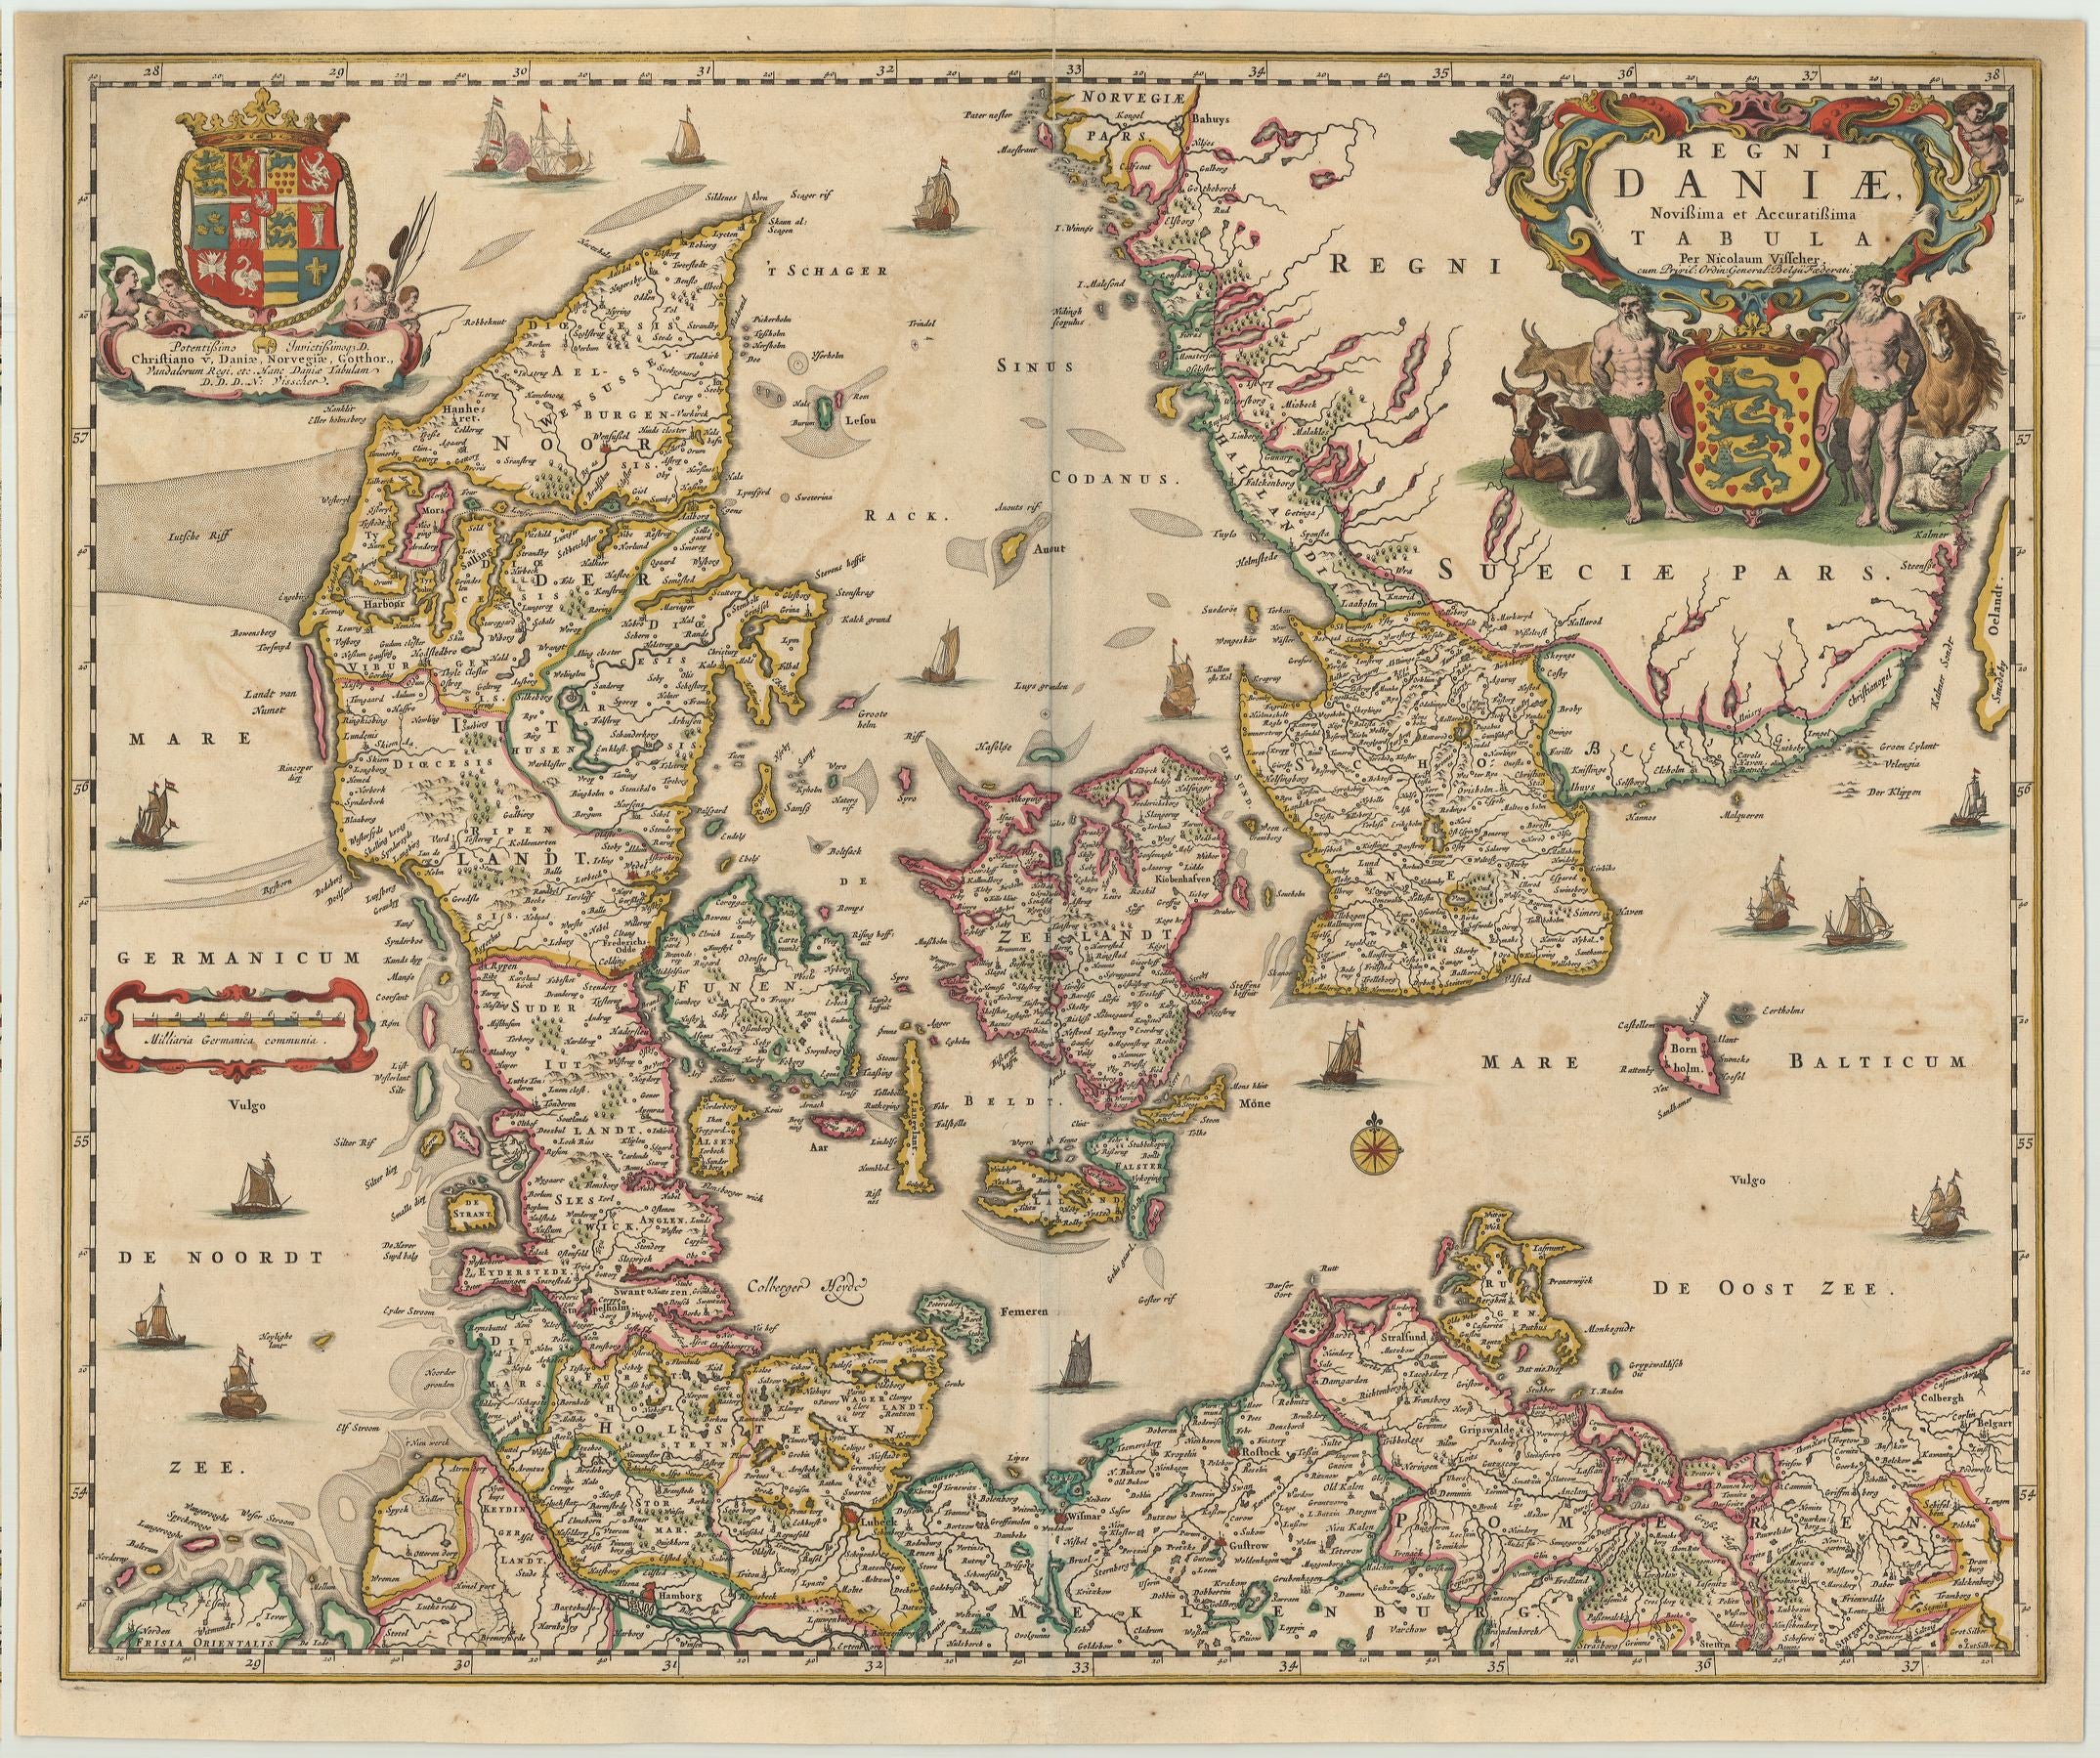 R2961  Visscher, Nicolaus: Regni Daniae Novisma et Accuratissima Tabula 1680